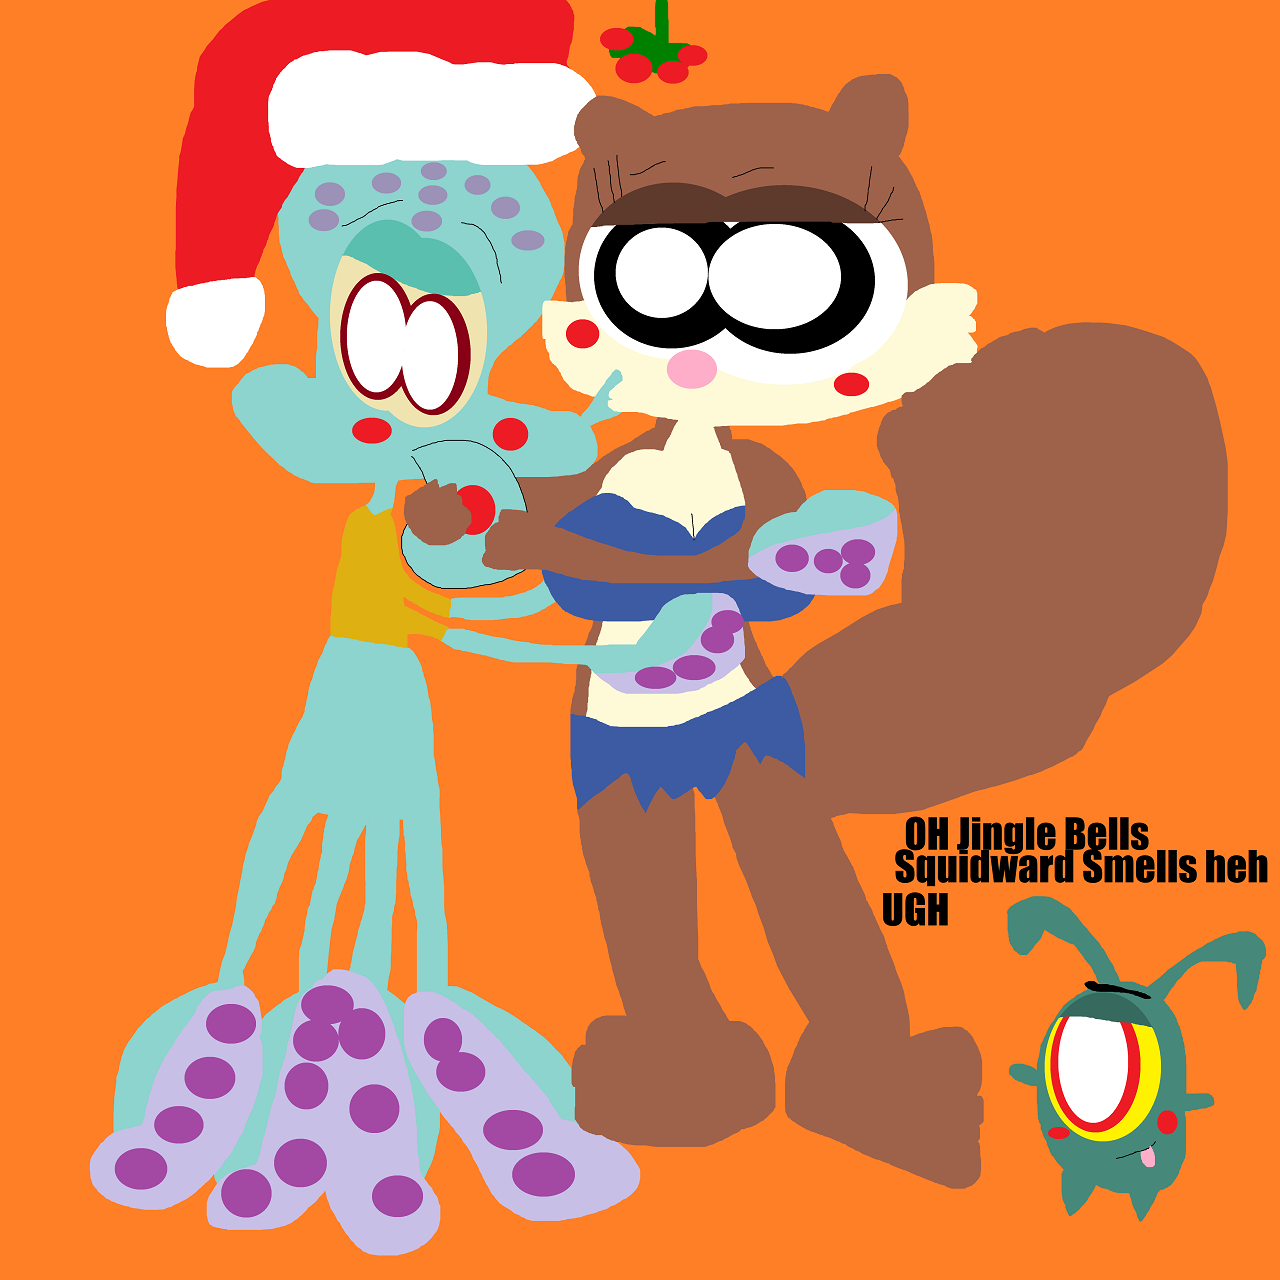 Oh Jingle Bells Squidward Smells Alt^^ by Falconlobo